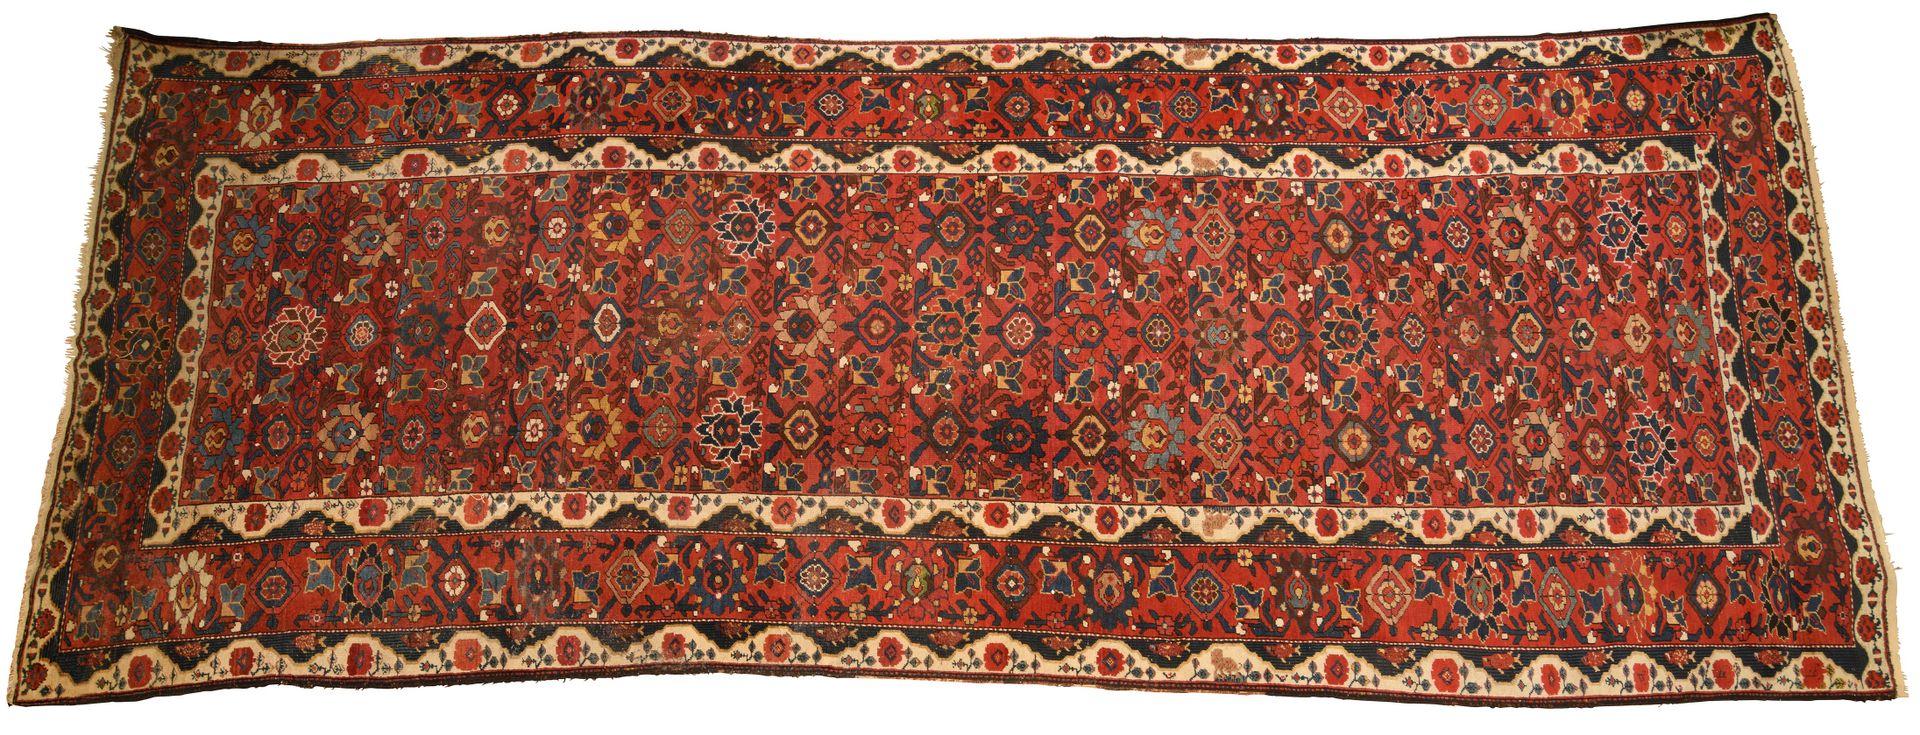 Null 东方画廊地毯，红色背景上有风格化的花卉装饰（磨损）510 x 190厘米